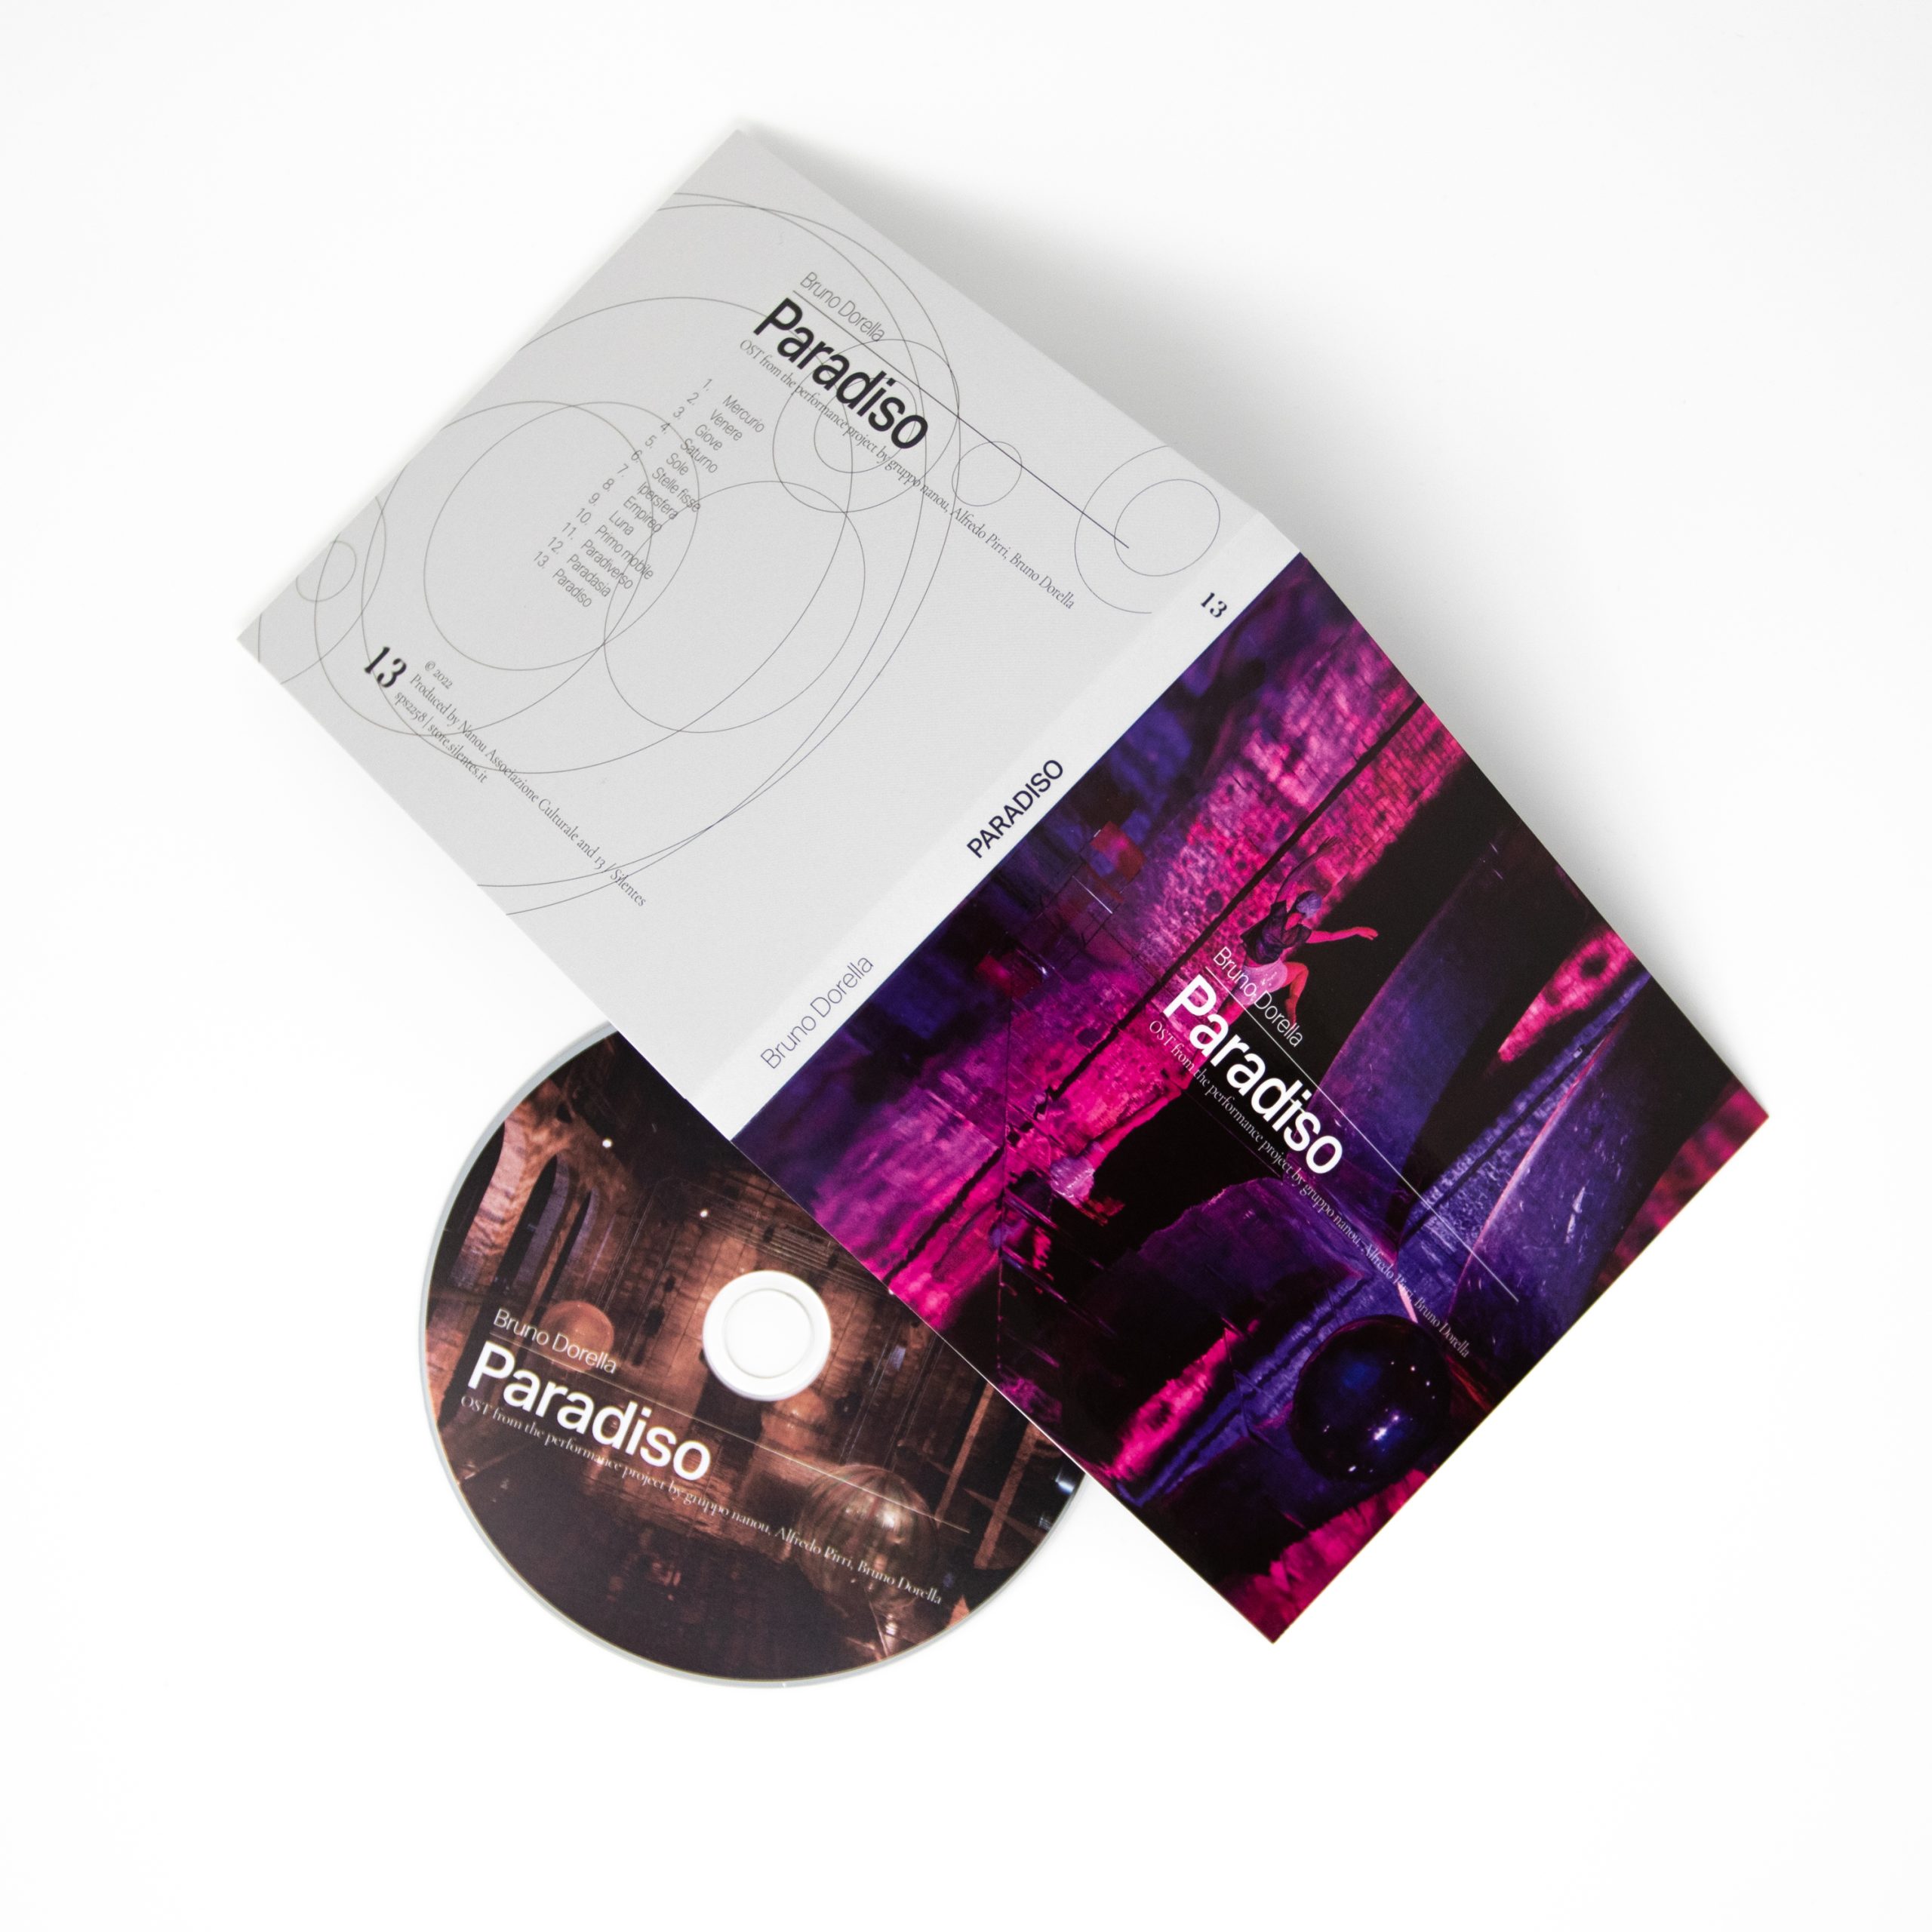 Paradiso, CD packaging